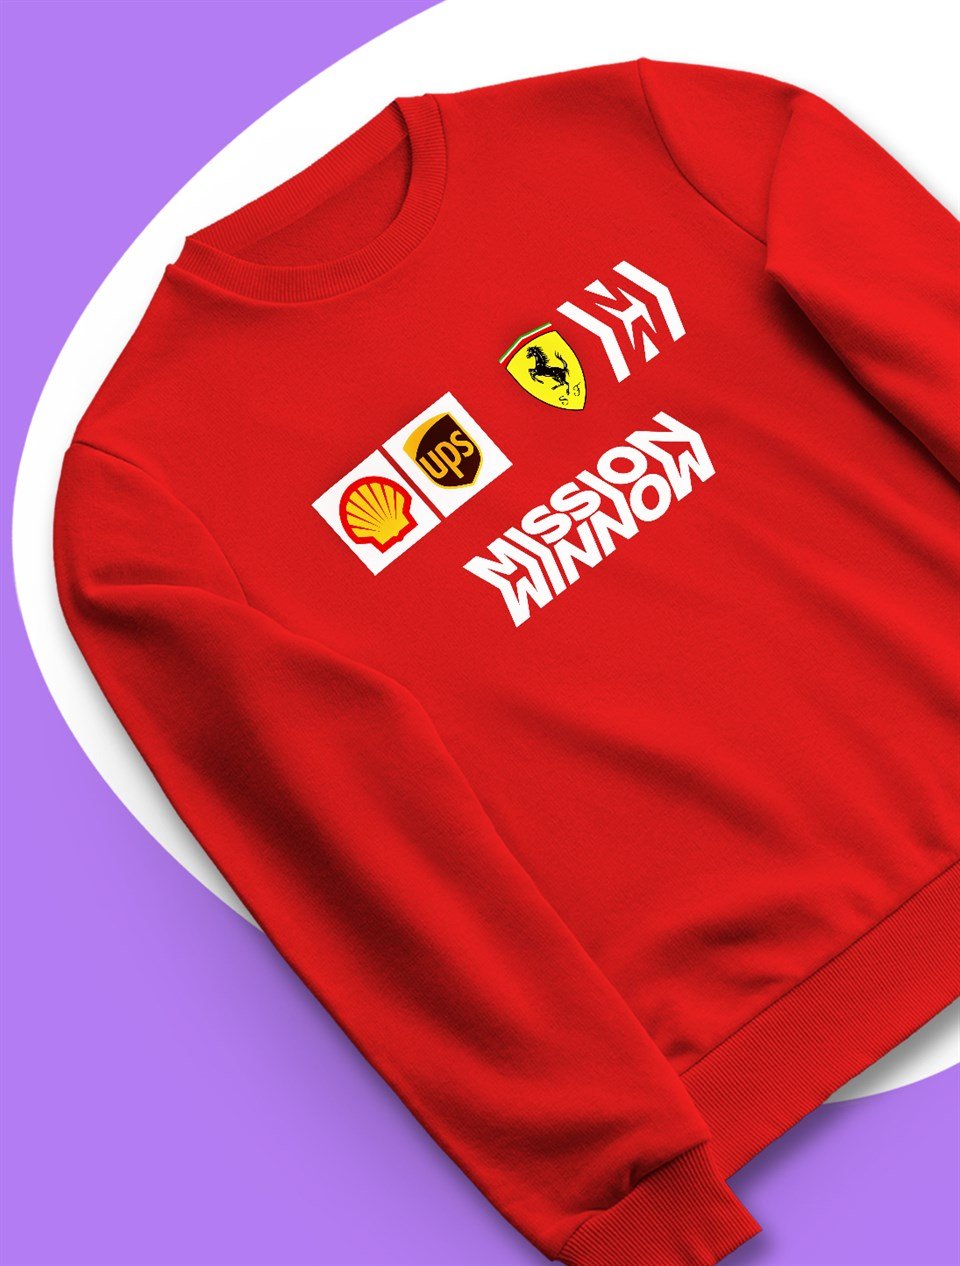 Scuderia Ferrari Mission Winnow Sweatshirt